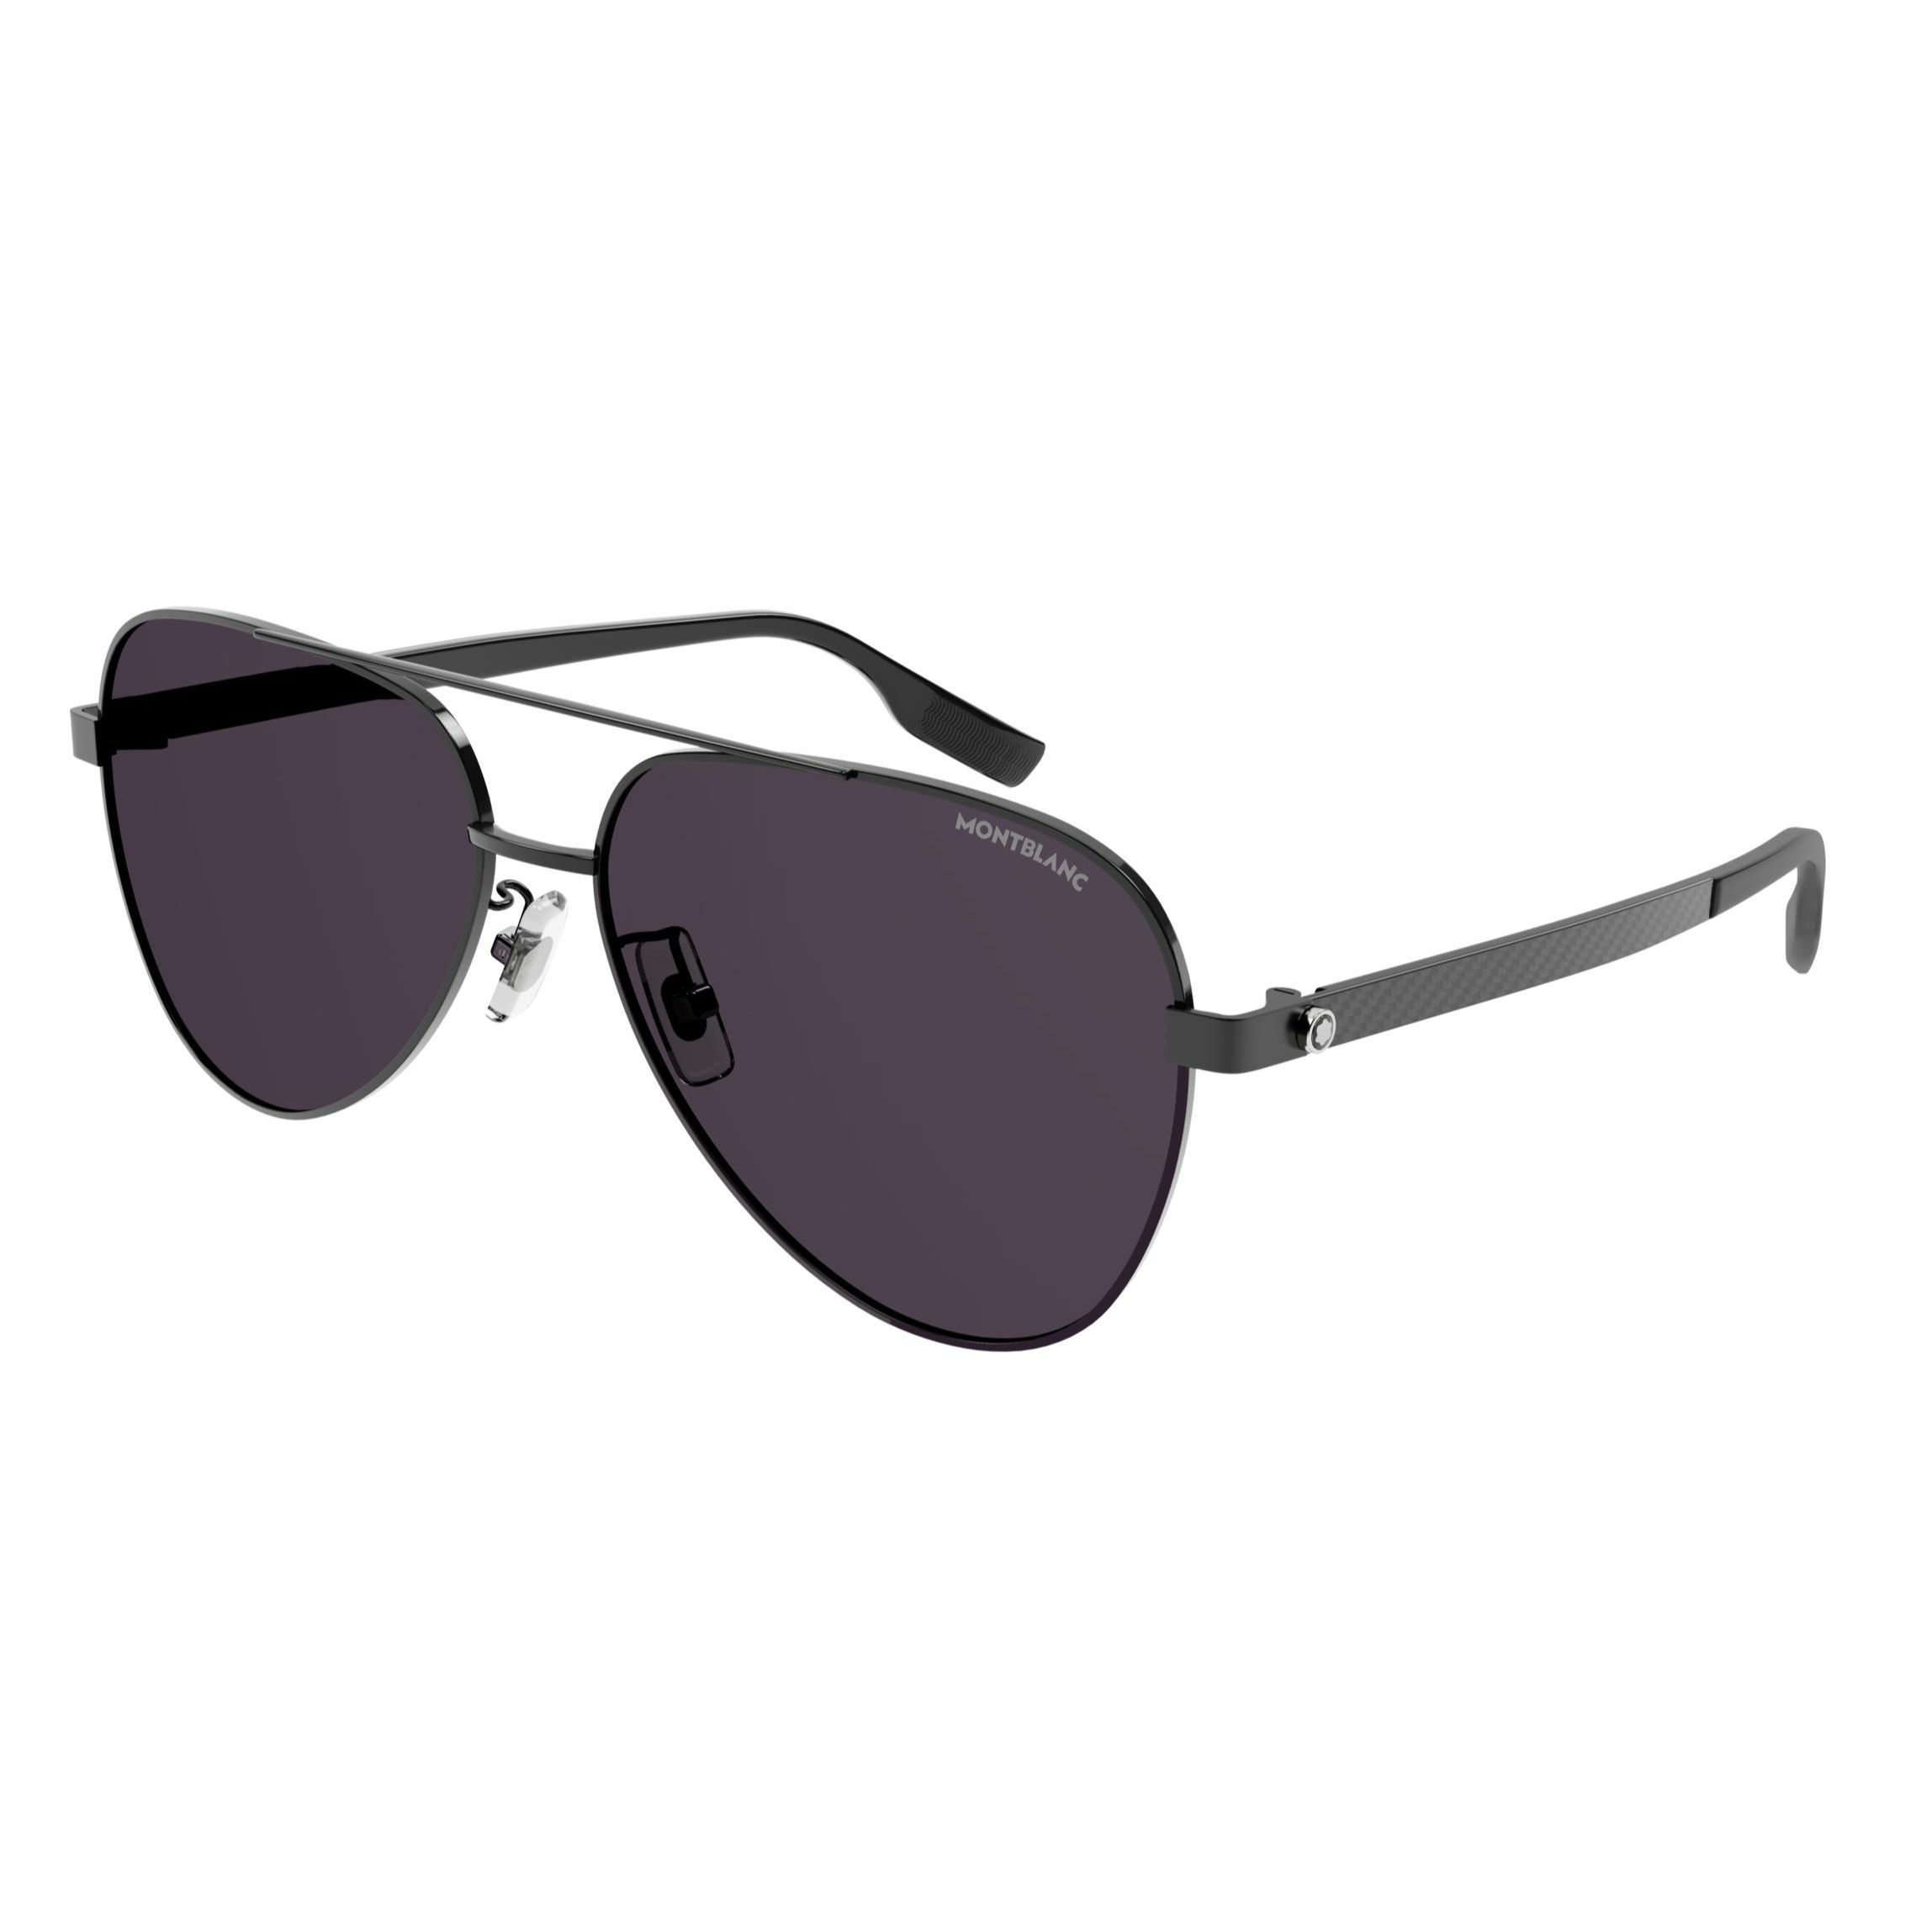 MB0182S Pilot Sunglasses 001 - size 59